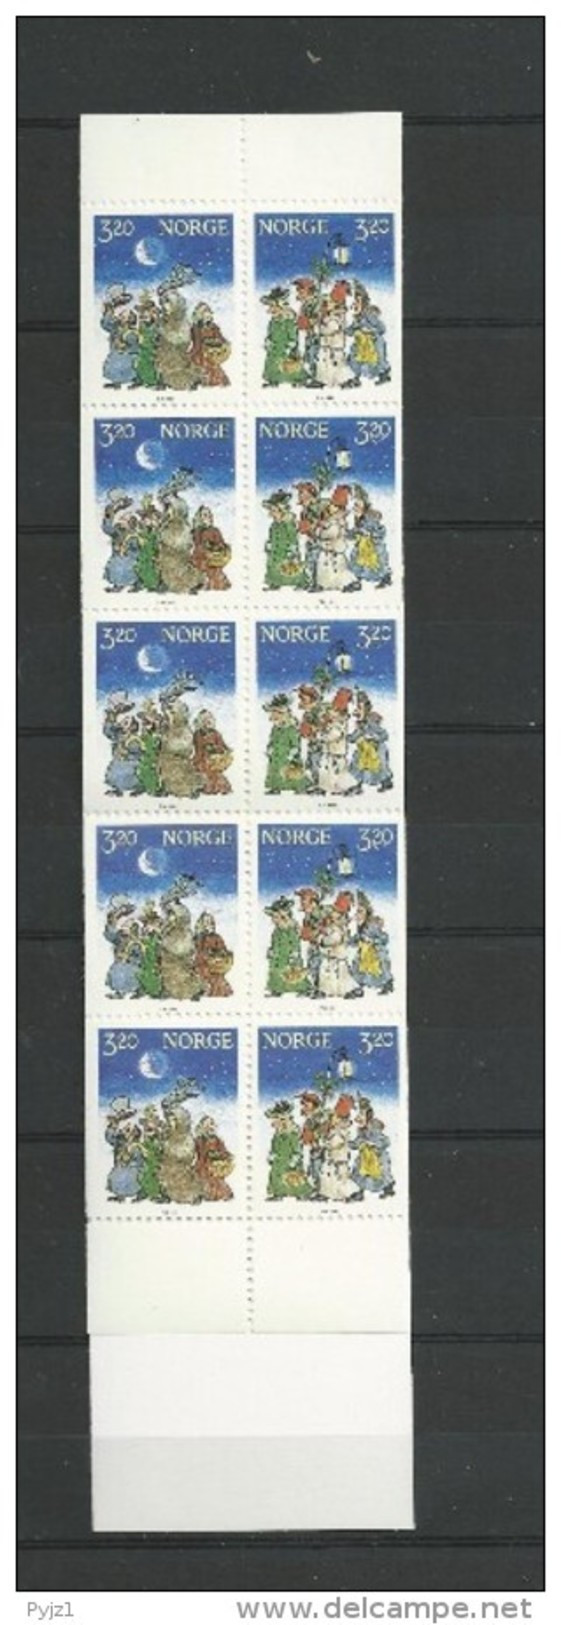 1991  MNH  Booklet, Norge, Norwegen, Norway, Postfris - Booklets